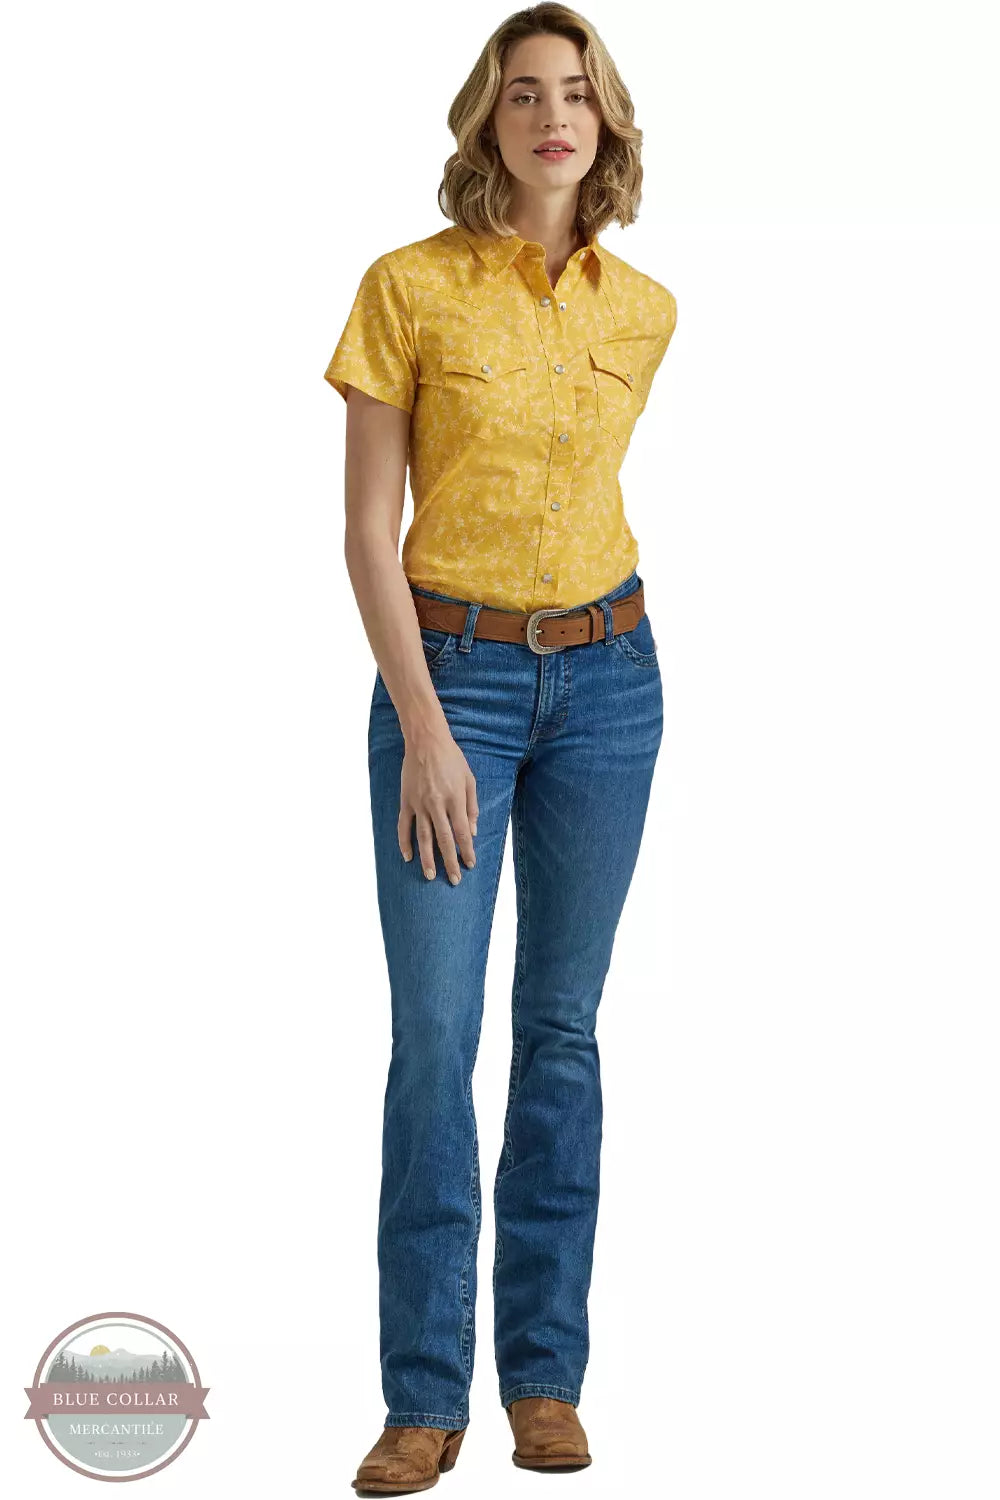 Wrangler 112347162 Yellow Western Snap Short Sleeve Shirt Full View